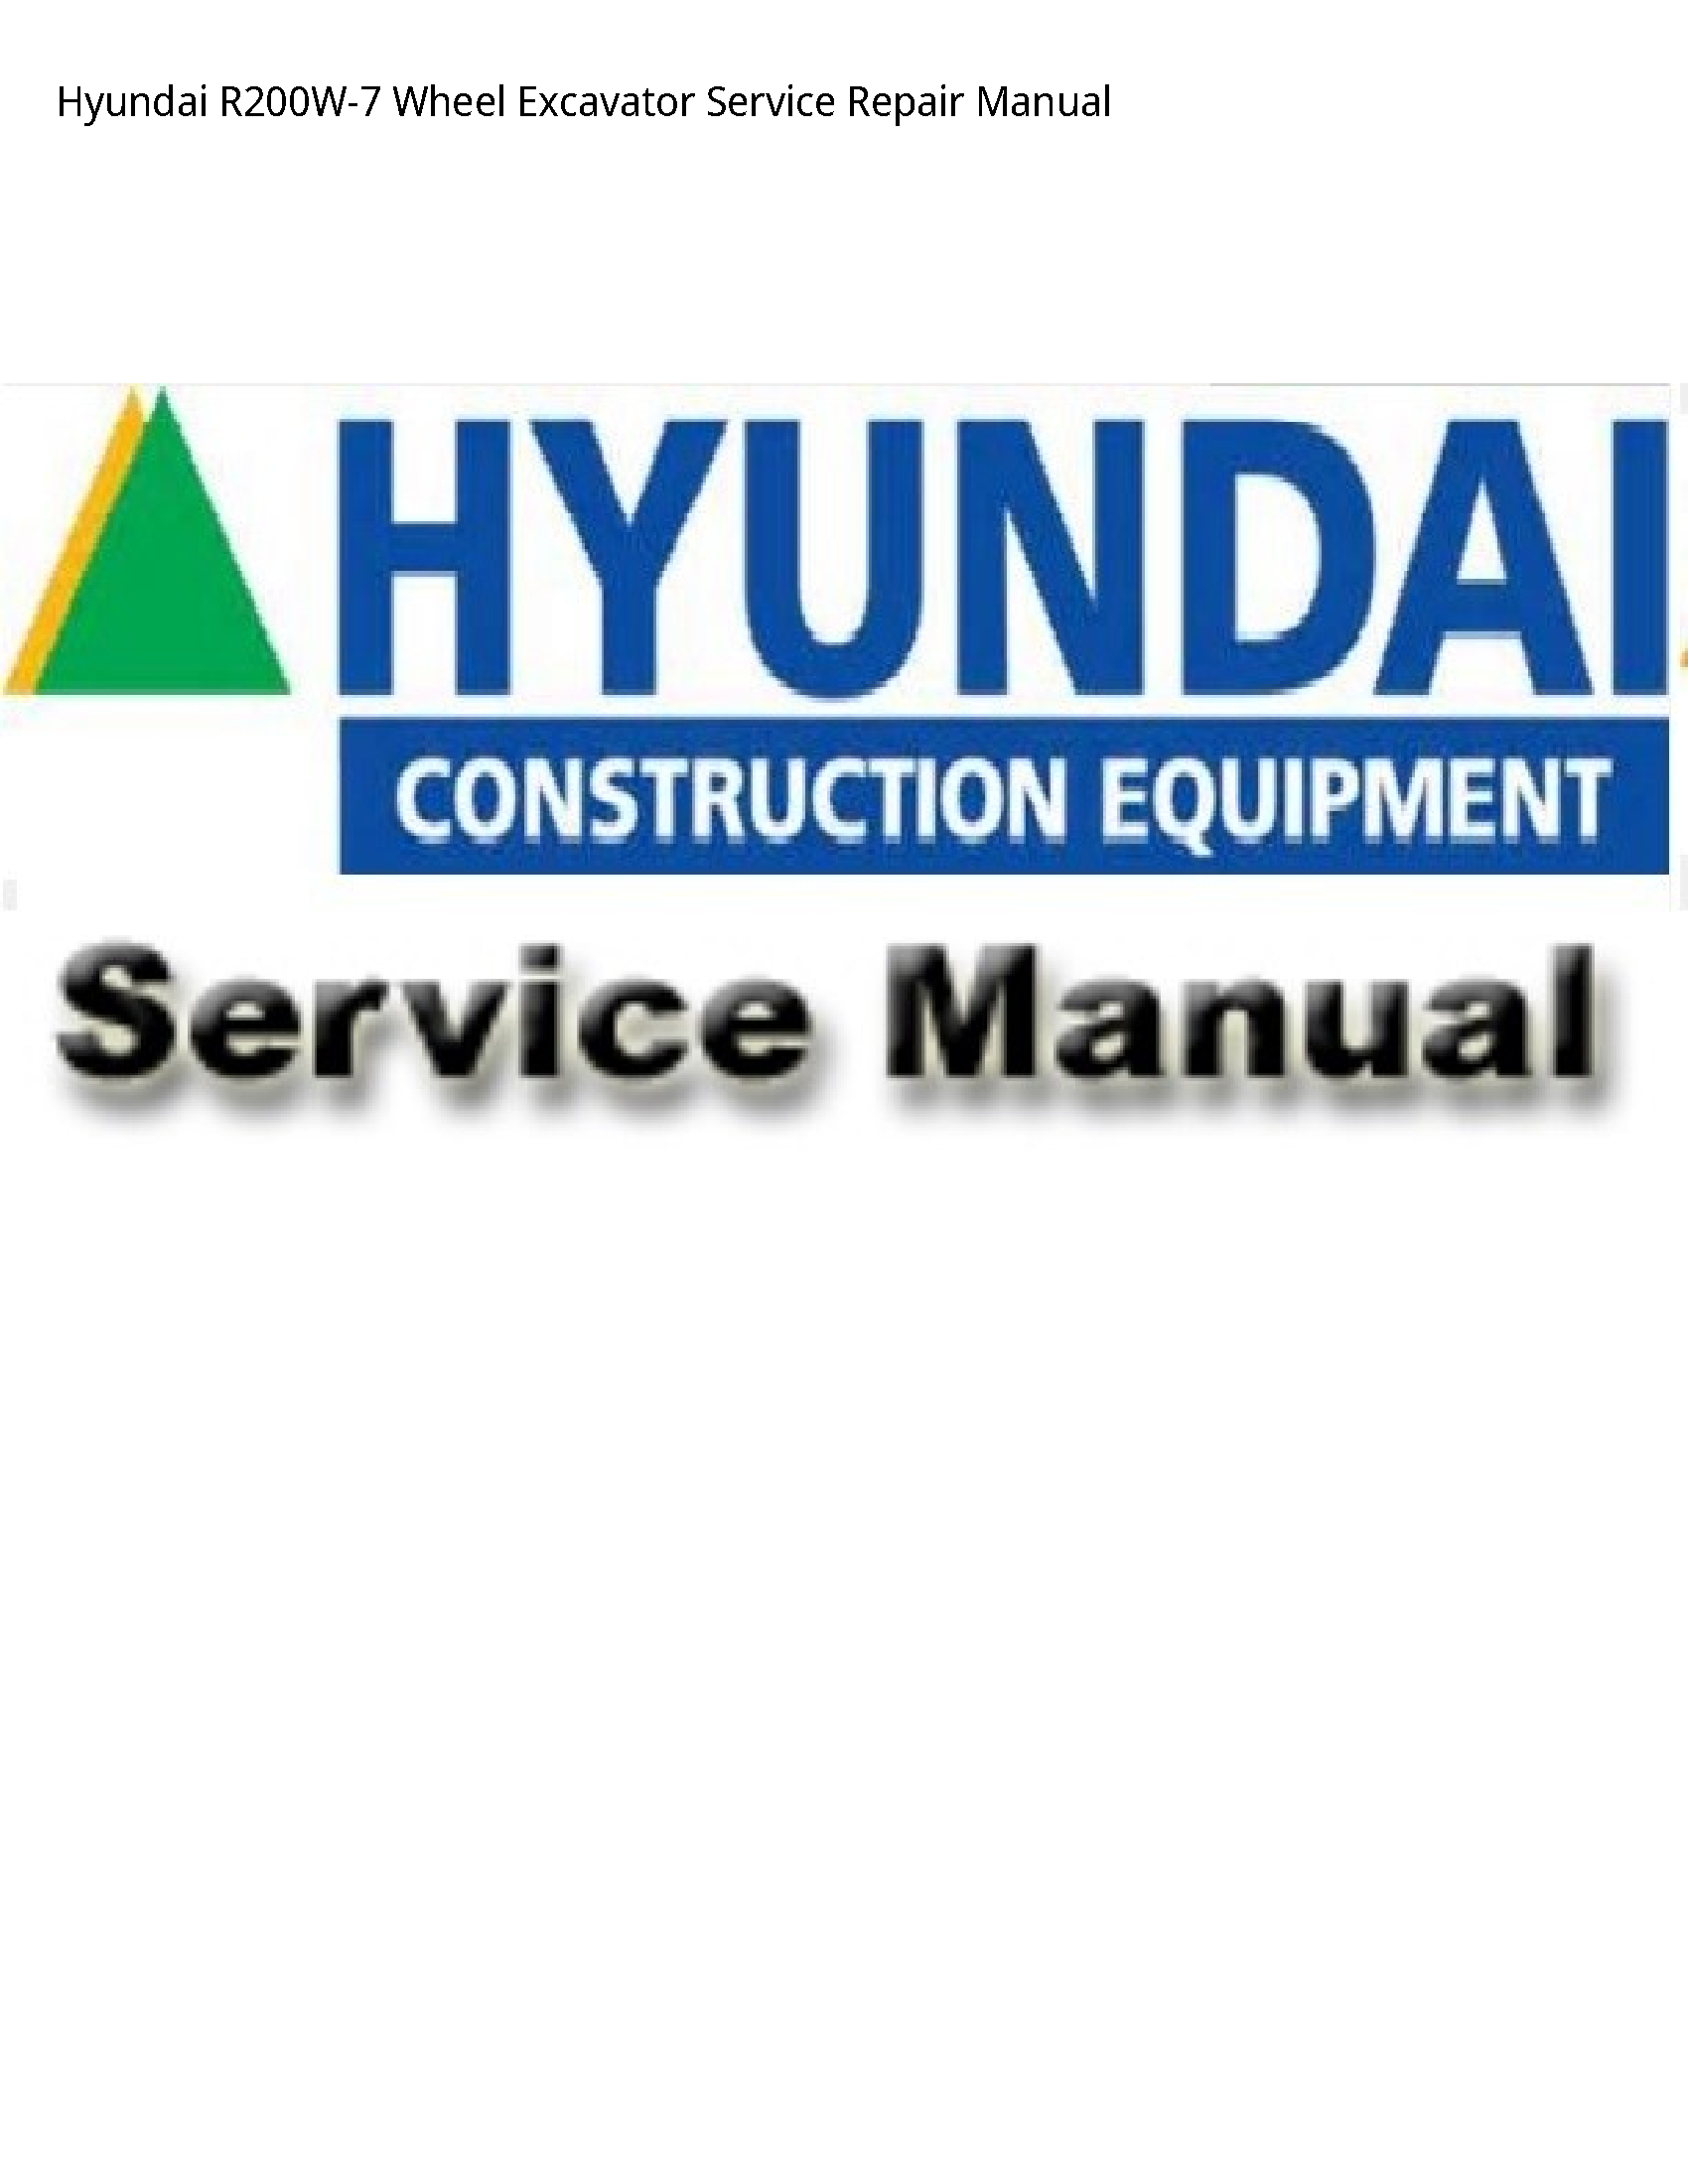 Hyundai R200W-7 Wheel Excavator manual